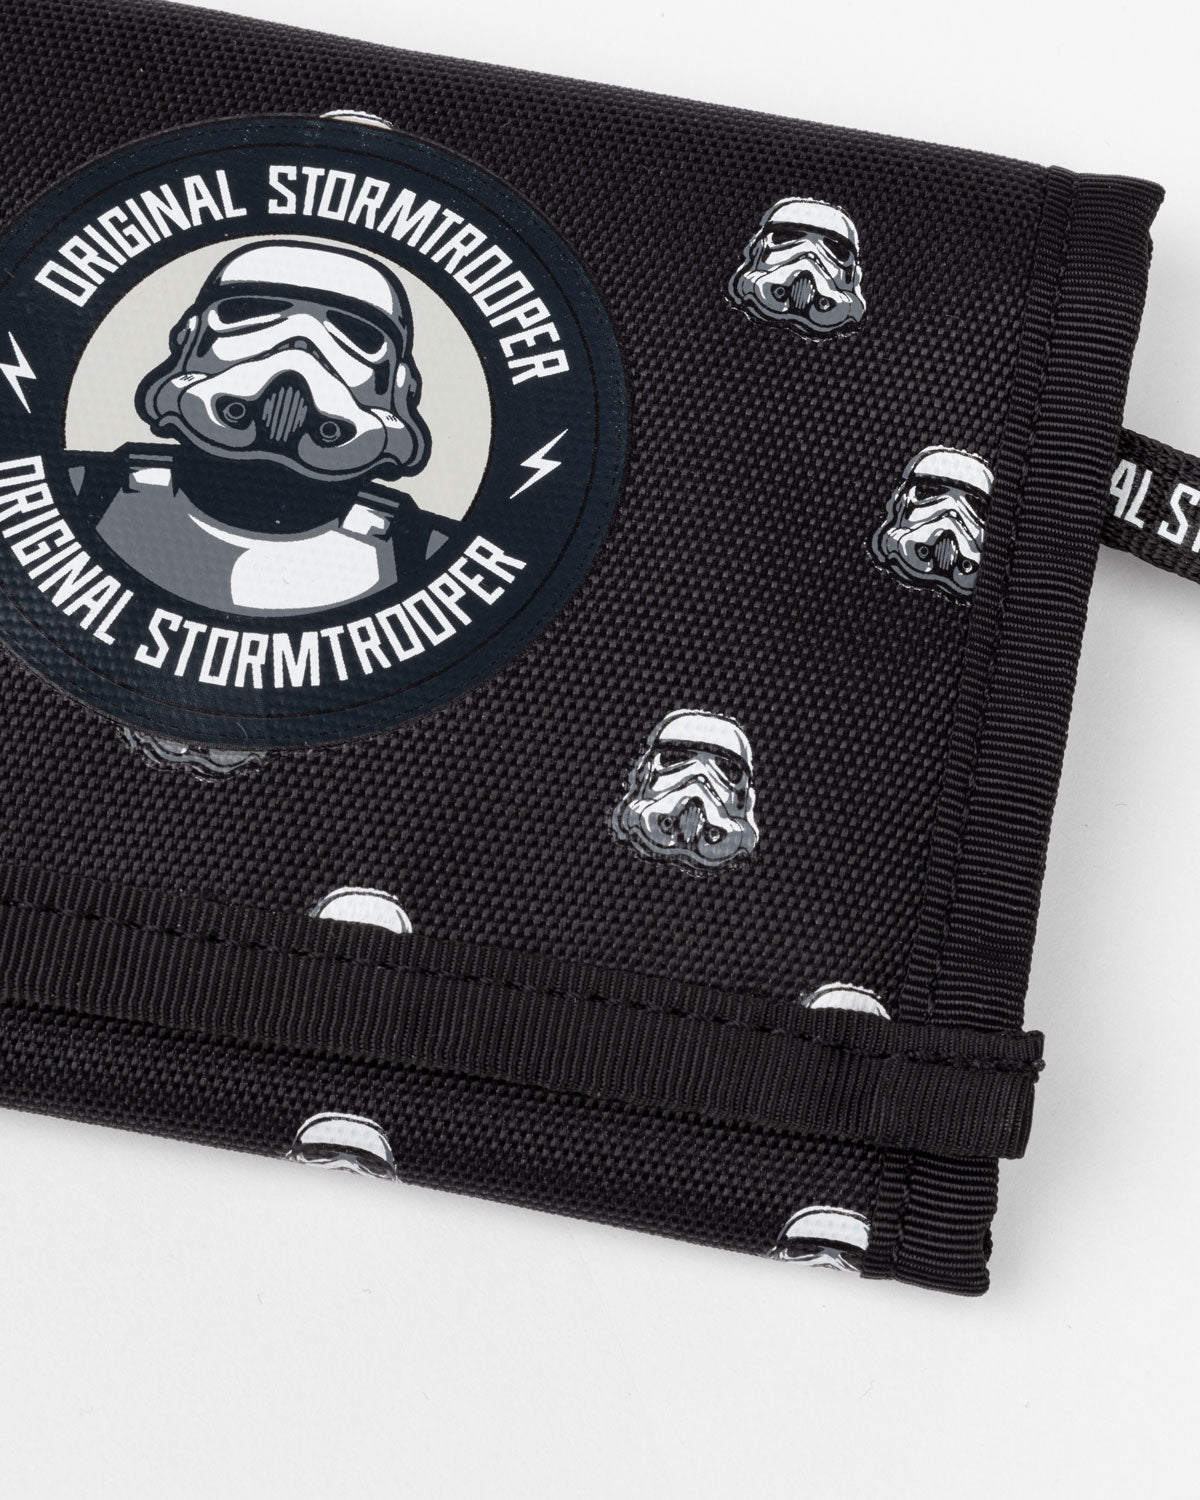 Original Stormtrooper coin purse "Retro Trooper"